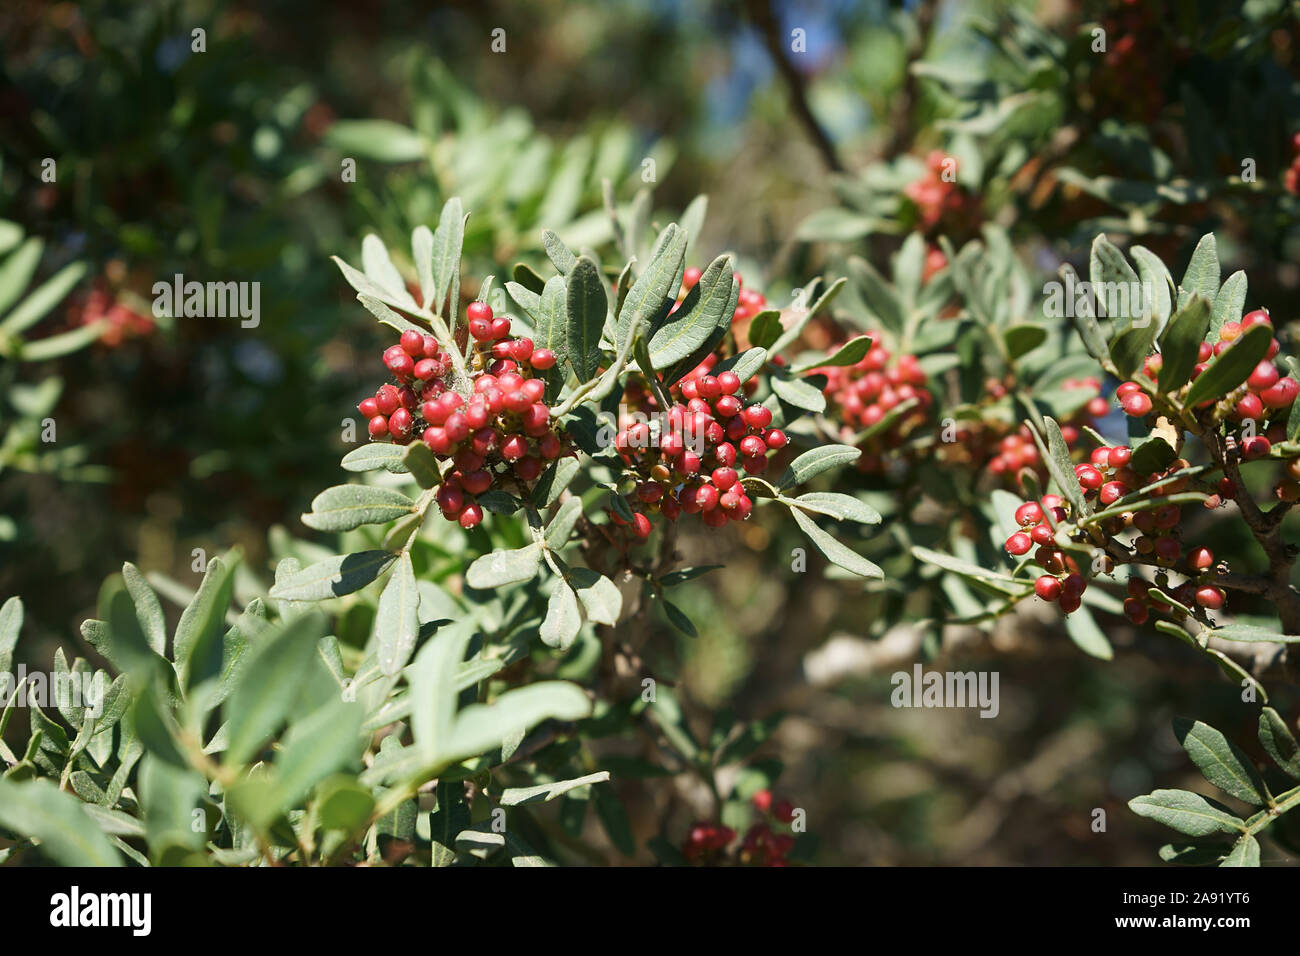 Bacche della Pianta di Lentisco, rote Beeren eines Mastixbaum in Sardinien, Italien - Pistacia lentiscus Nahaufnahme Stockfoto